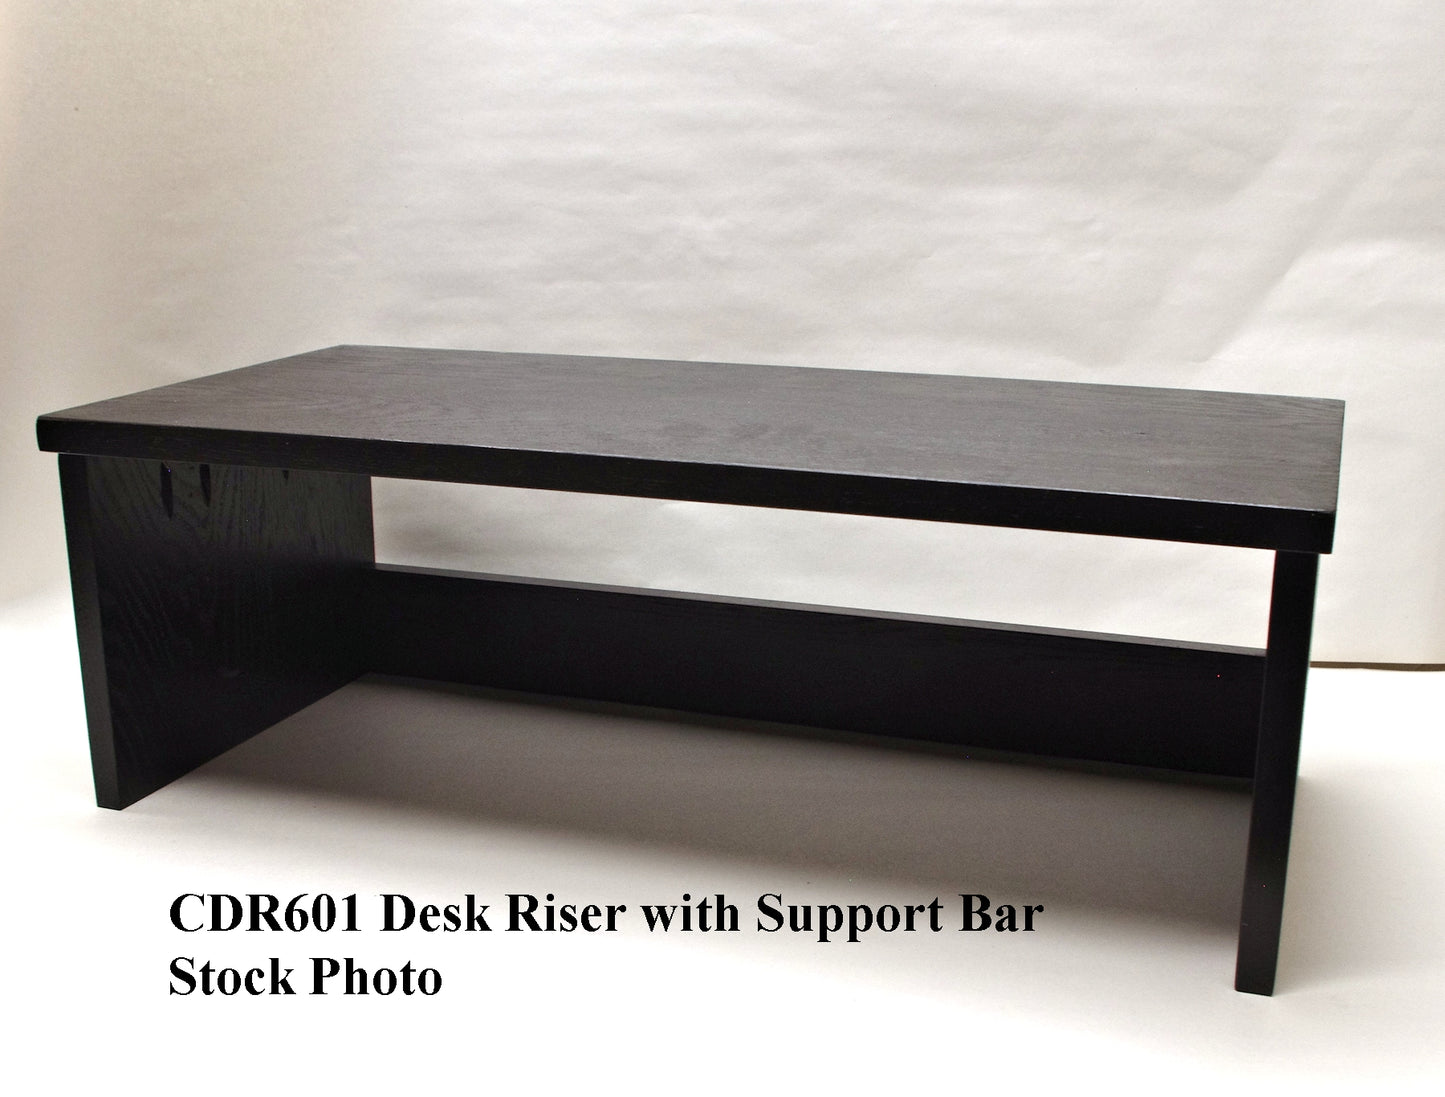 CDR601 Desk Riser with Support Bar - 19" Length